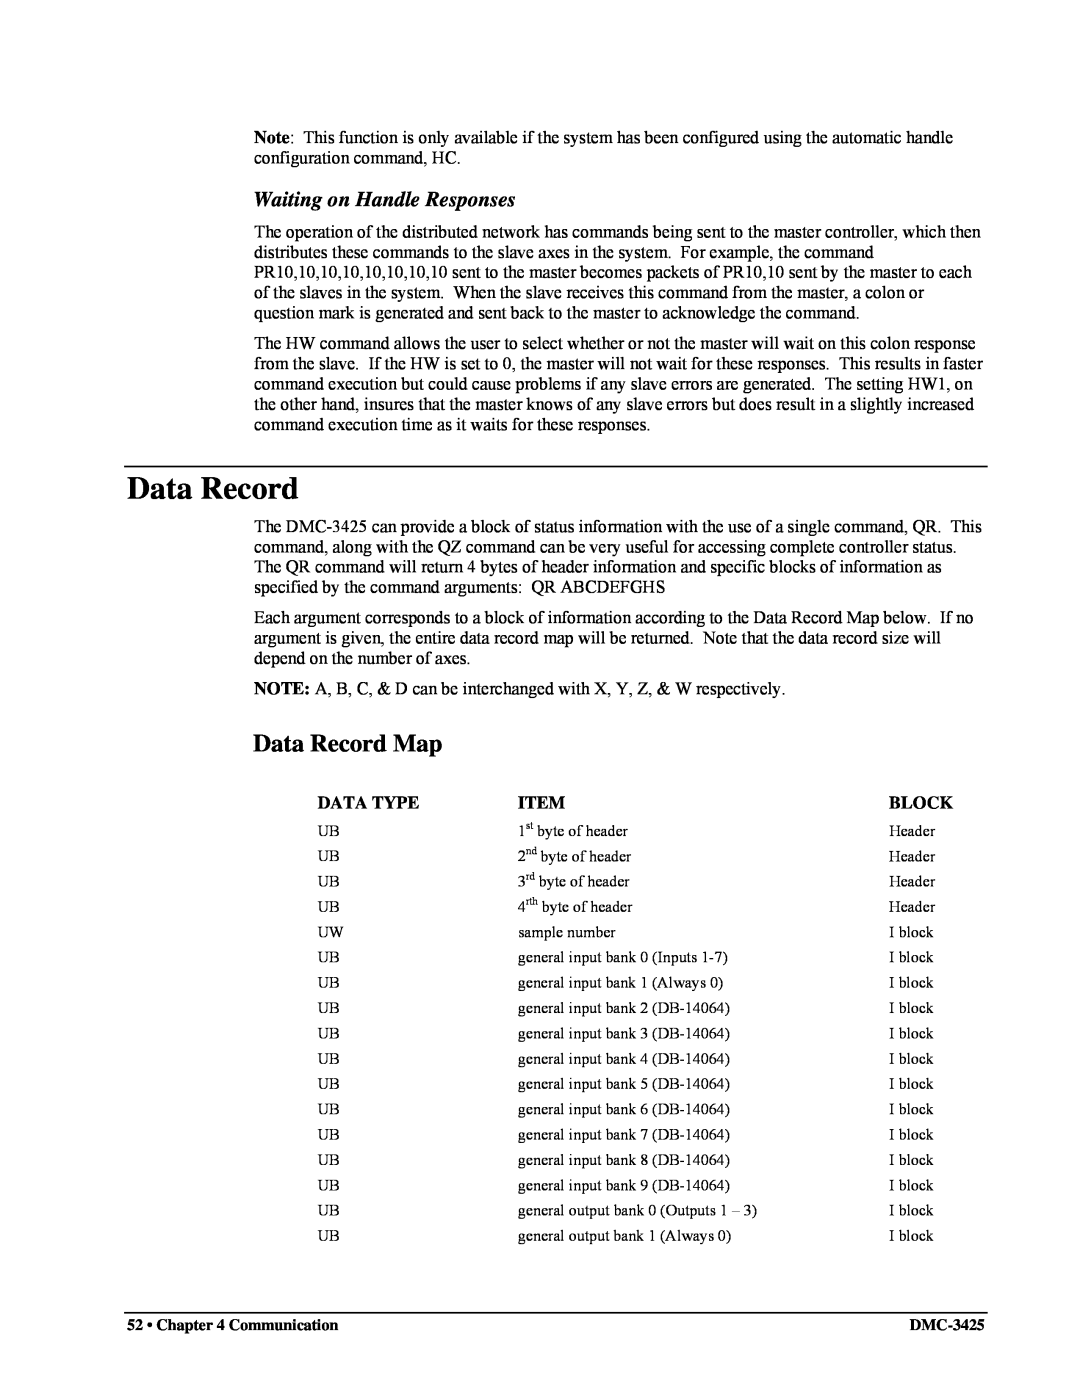 Galil DMC-3425 user manual Data Record Map, Waiting on Handle Responses 